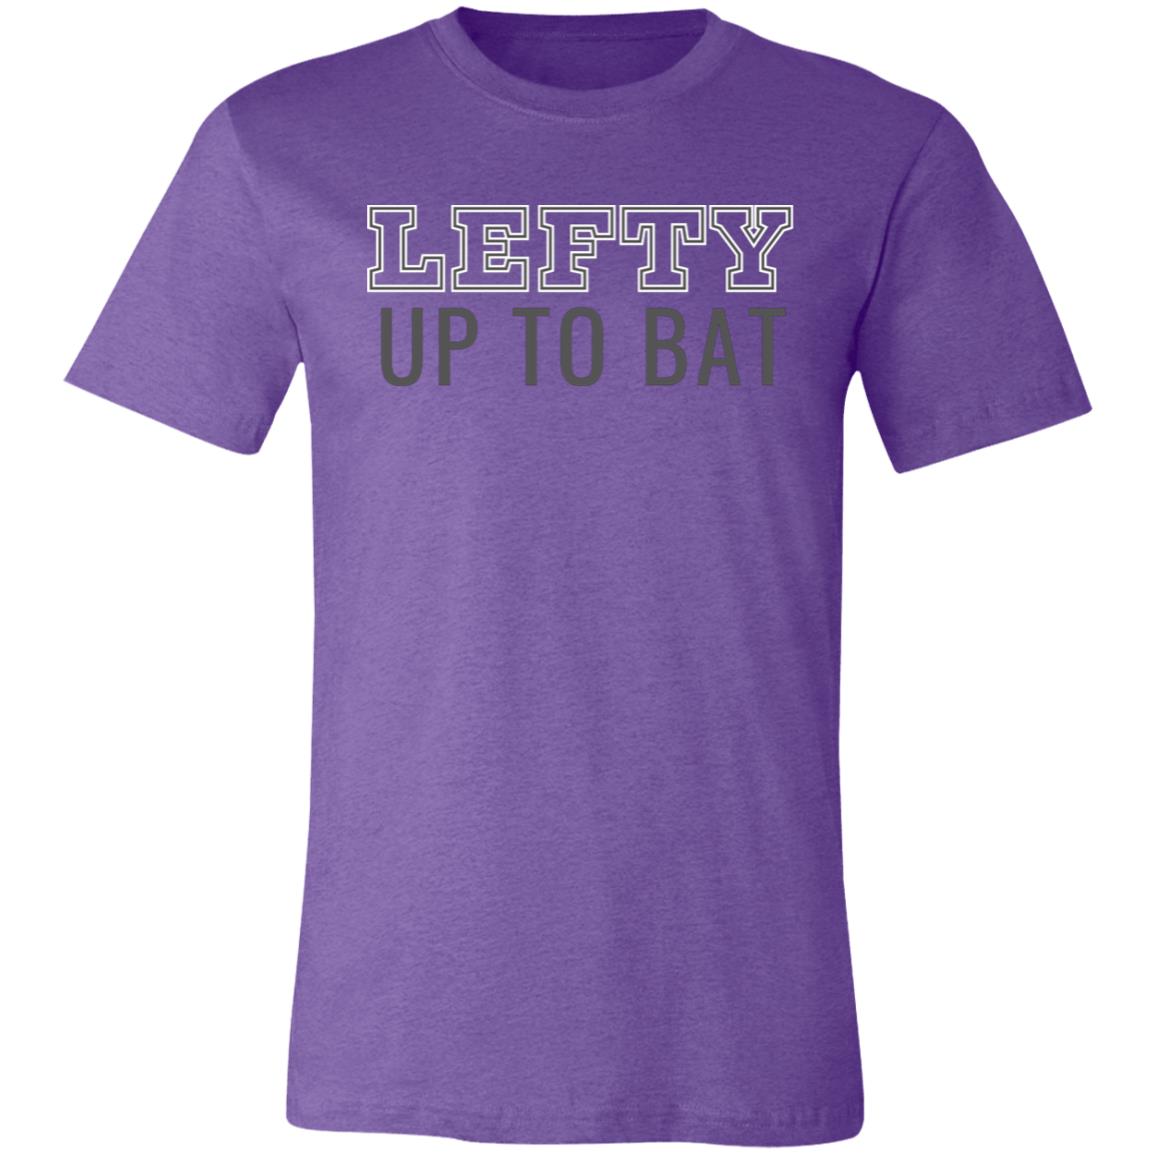 Lefty Up to Bat Comfy Baseball T-Shirt